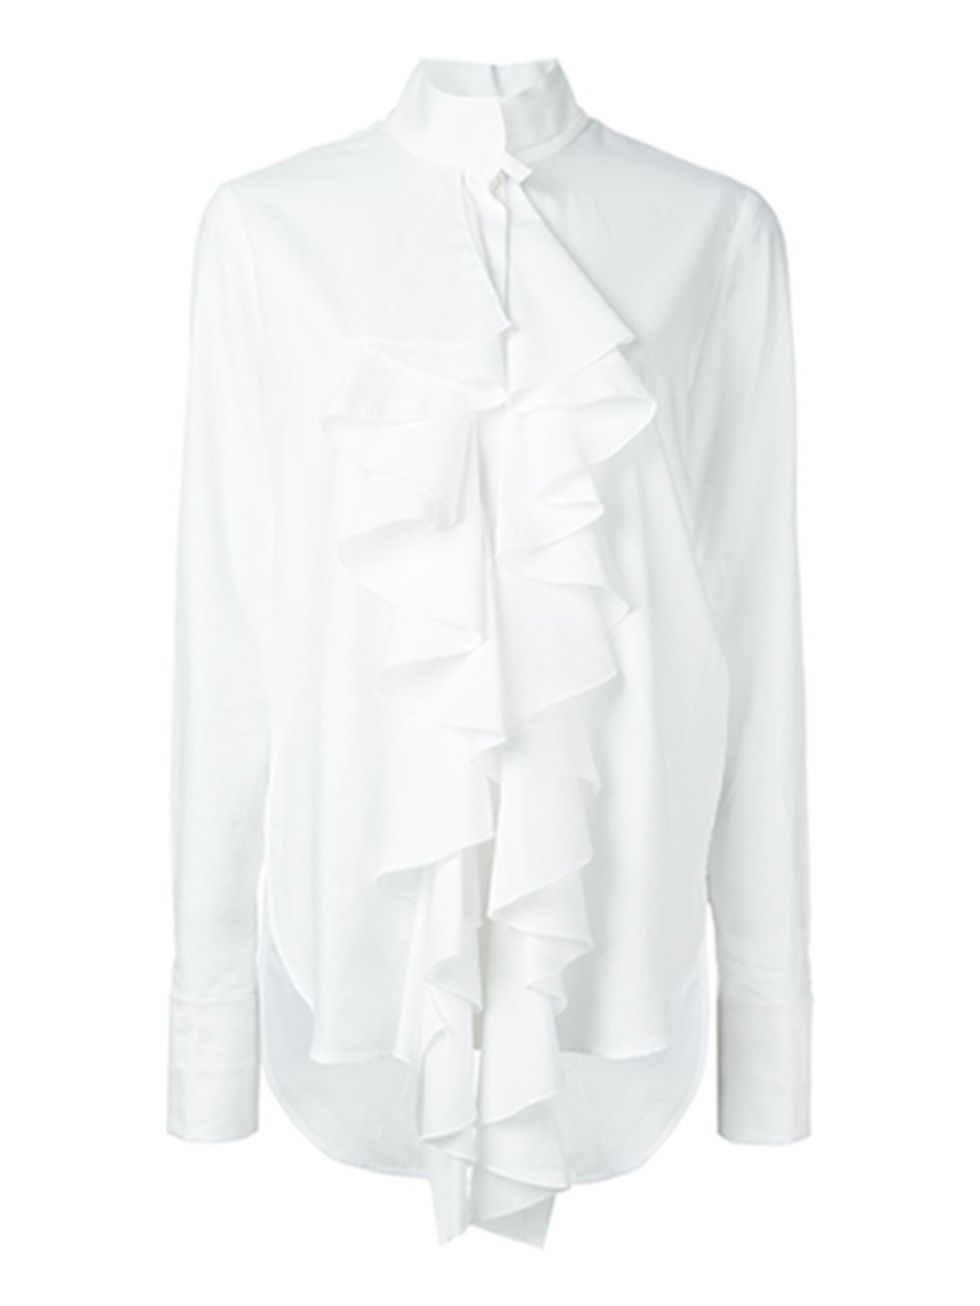 <p>Cotton ruffle shirt, £674.47, <a href="http://www.farfetch.com/uk/shopping/women/ellery-ruffle-shirt--item-11337183.aspx?storeid=9689&ffref=lp_pic_37_2_">Ellery at Farfetch</a></p>